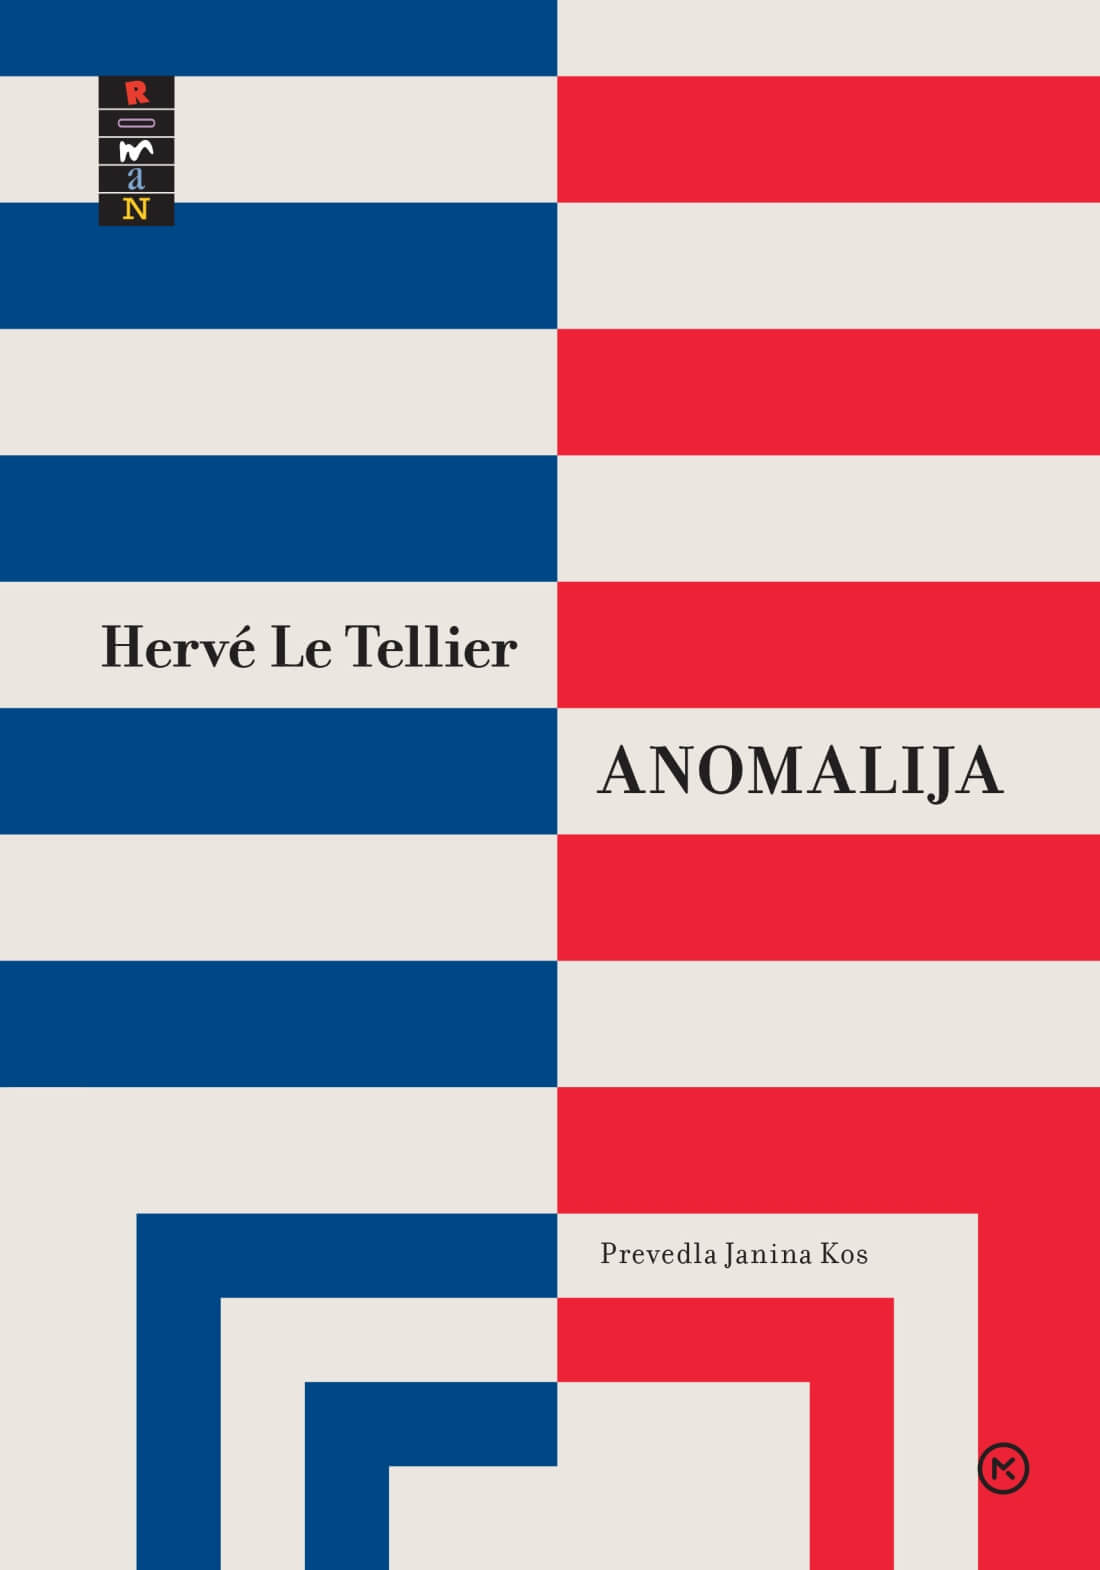 ANOMALIJA, Hervé Le Tellier